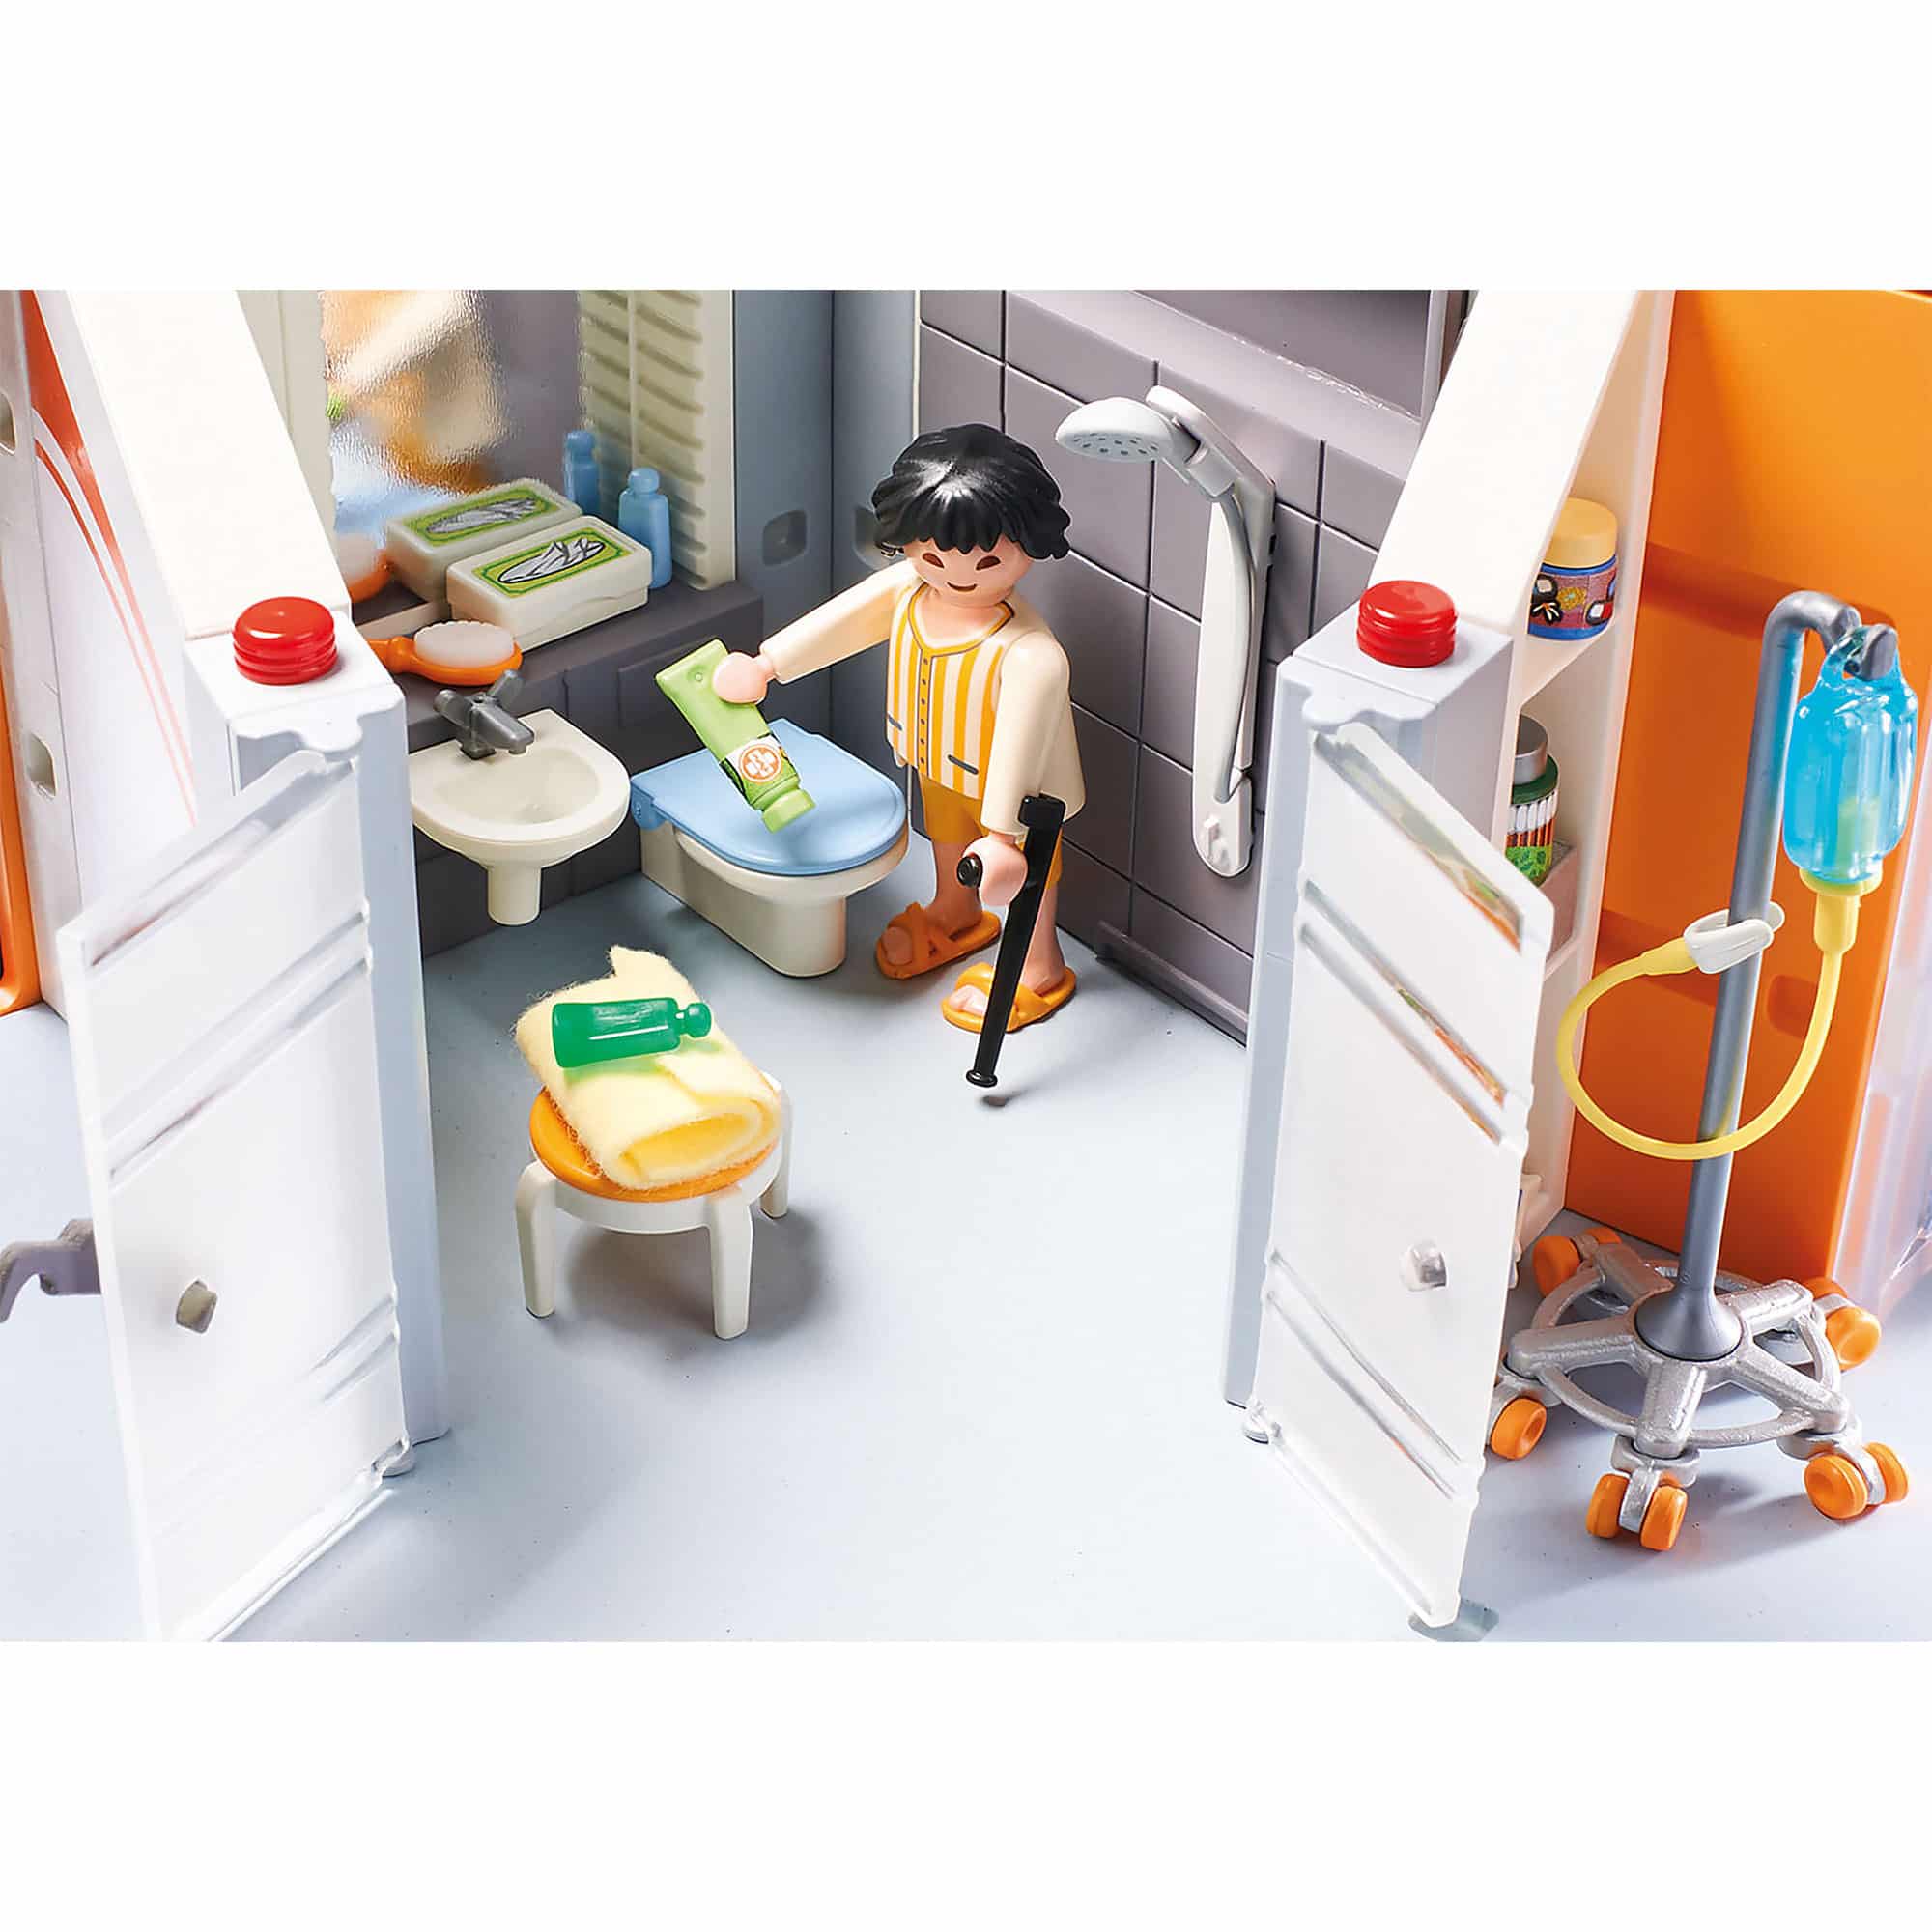 Playmobil - City Life - Large Hospital 70190